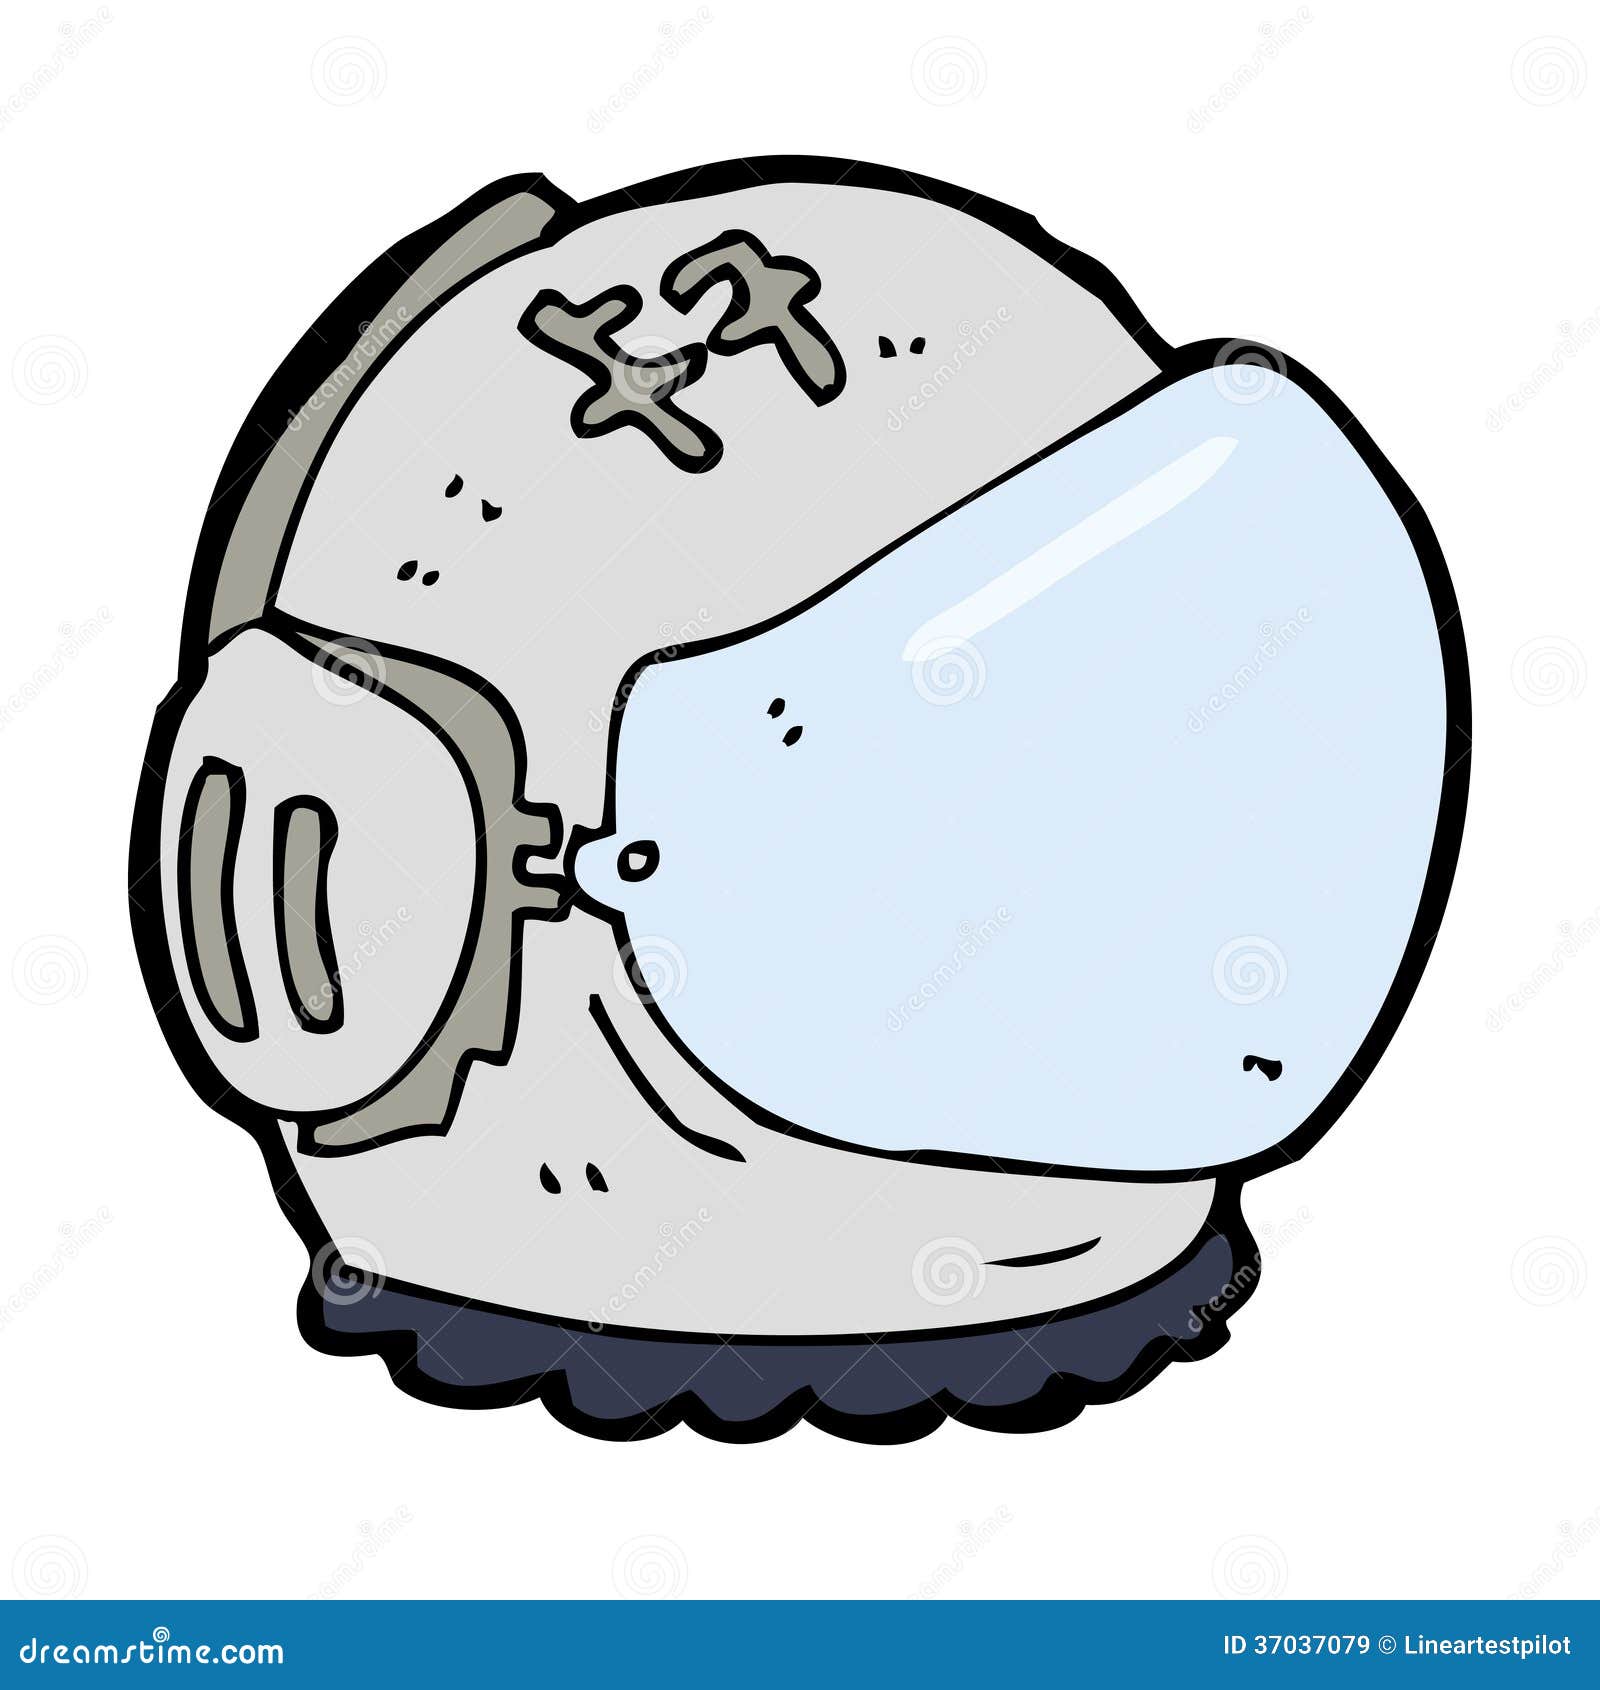 Cartoon Astronaut Helmet Royalty Free Stock Images - Image: 37037079